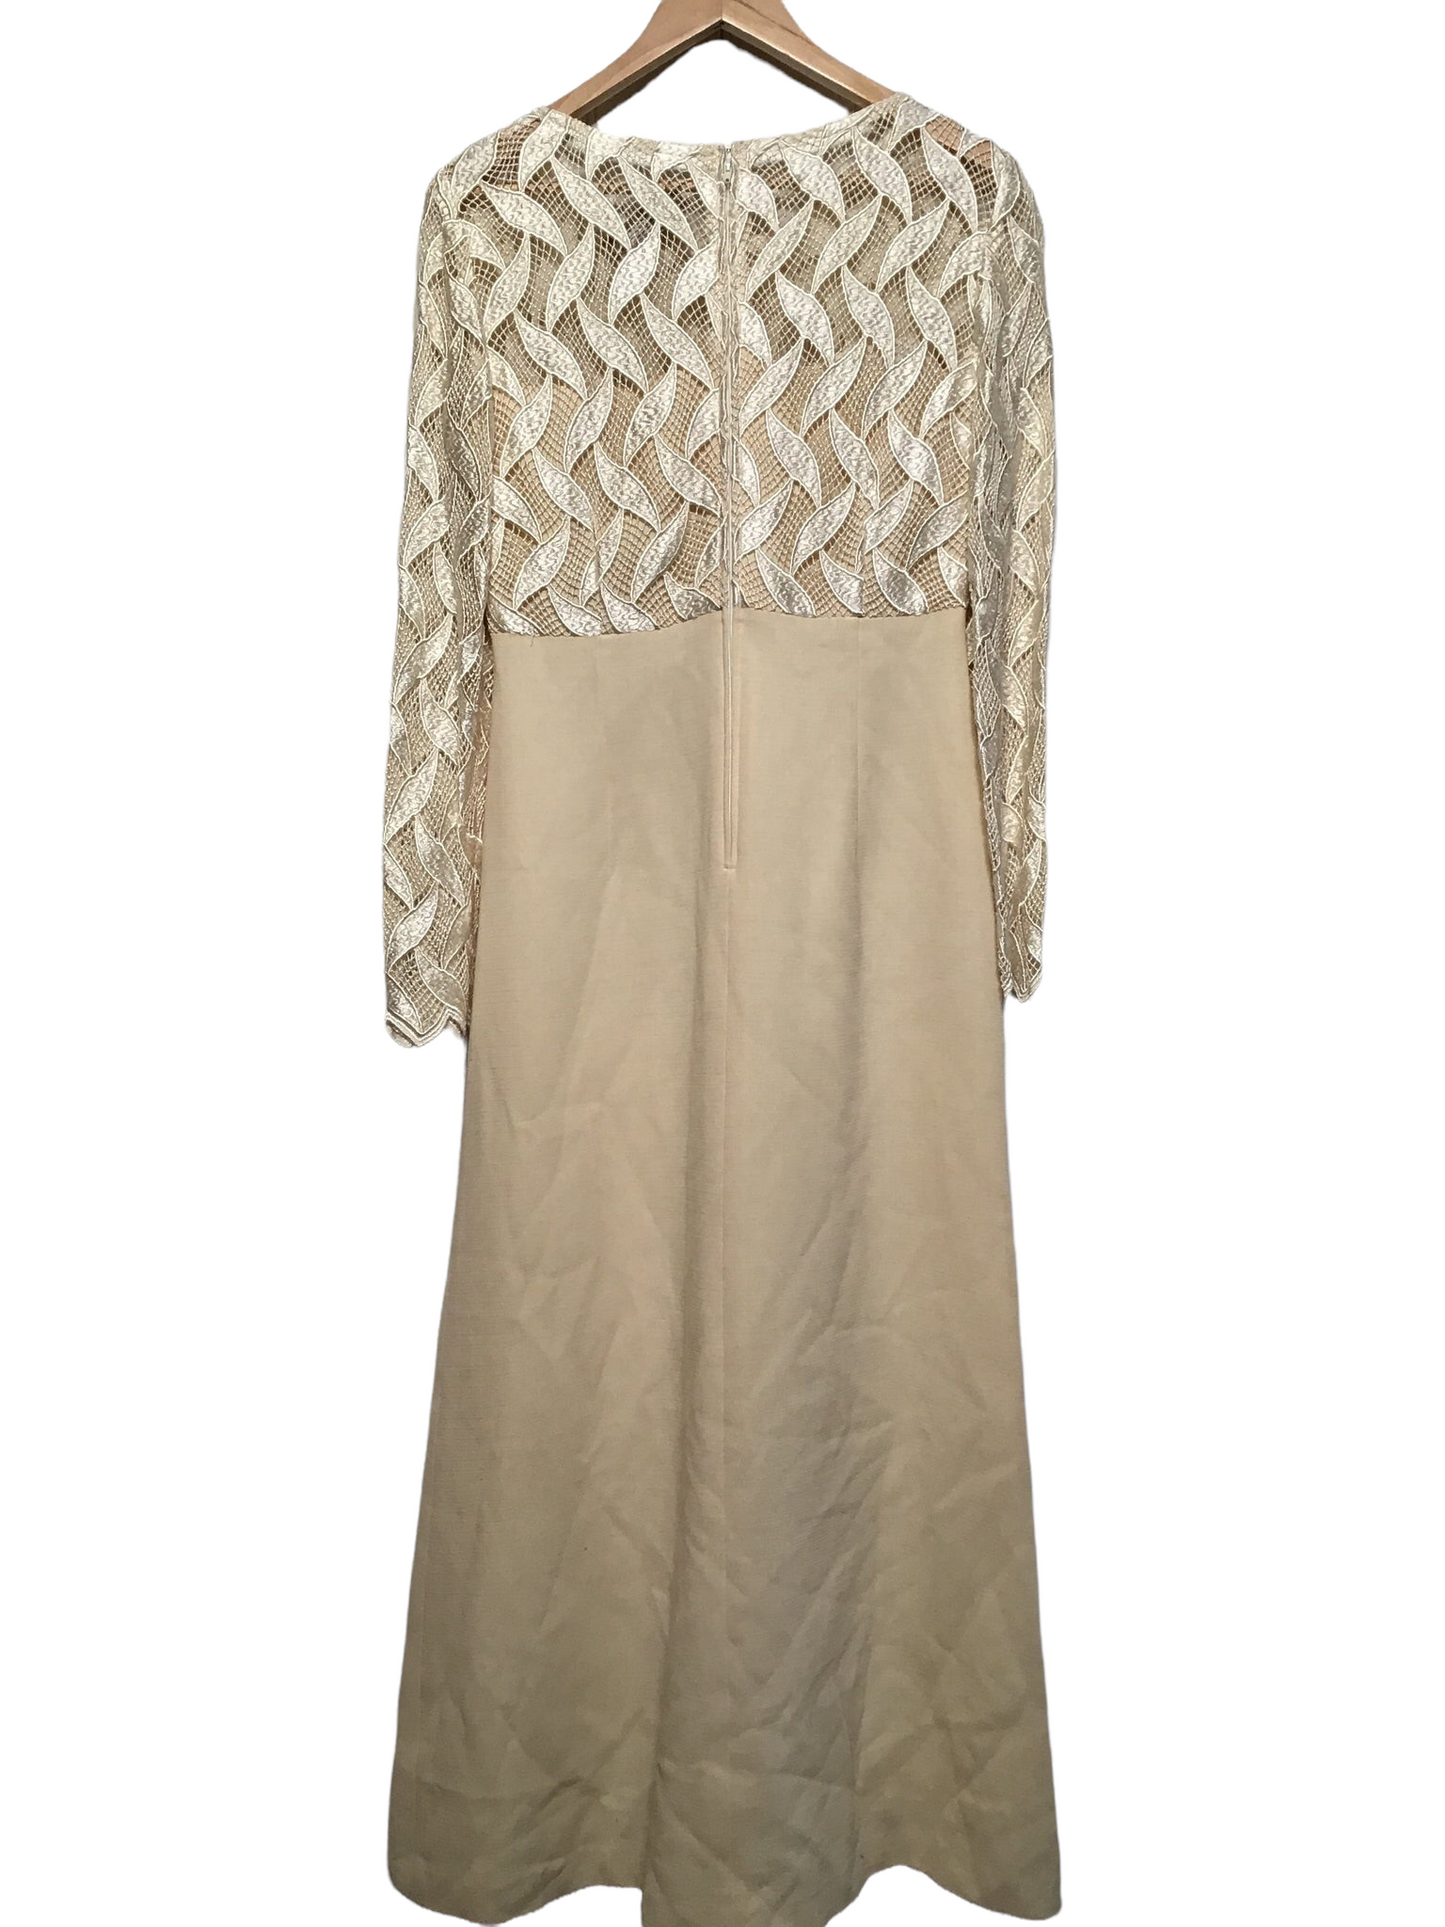 Ivory Evening Dress (Size L)